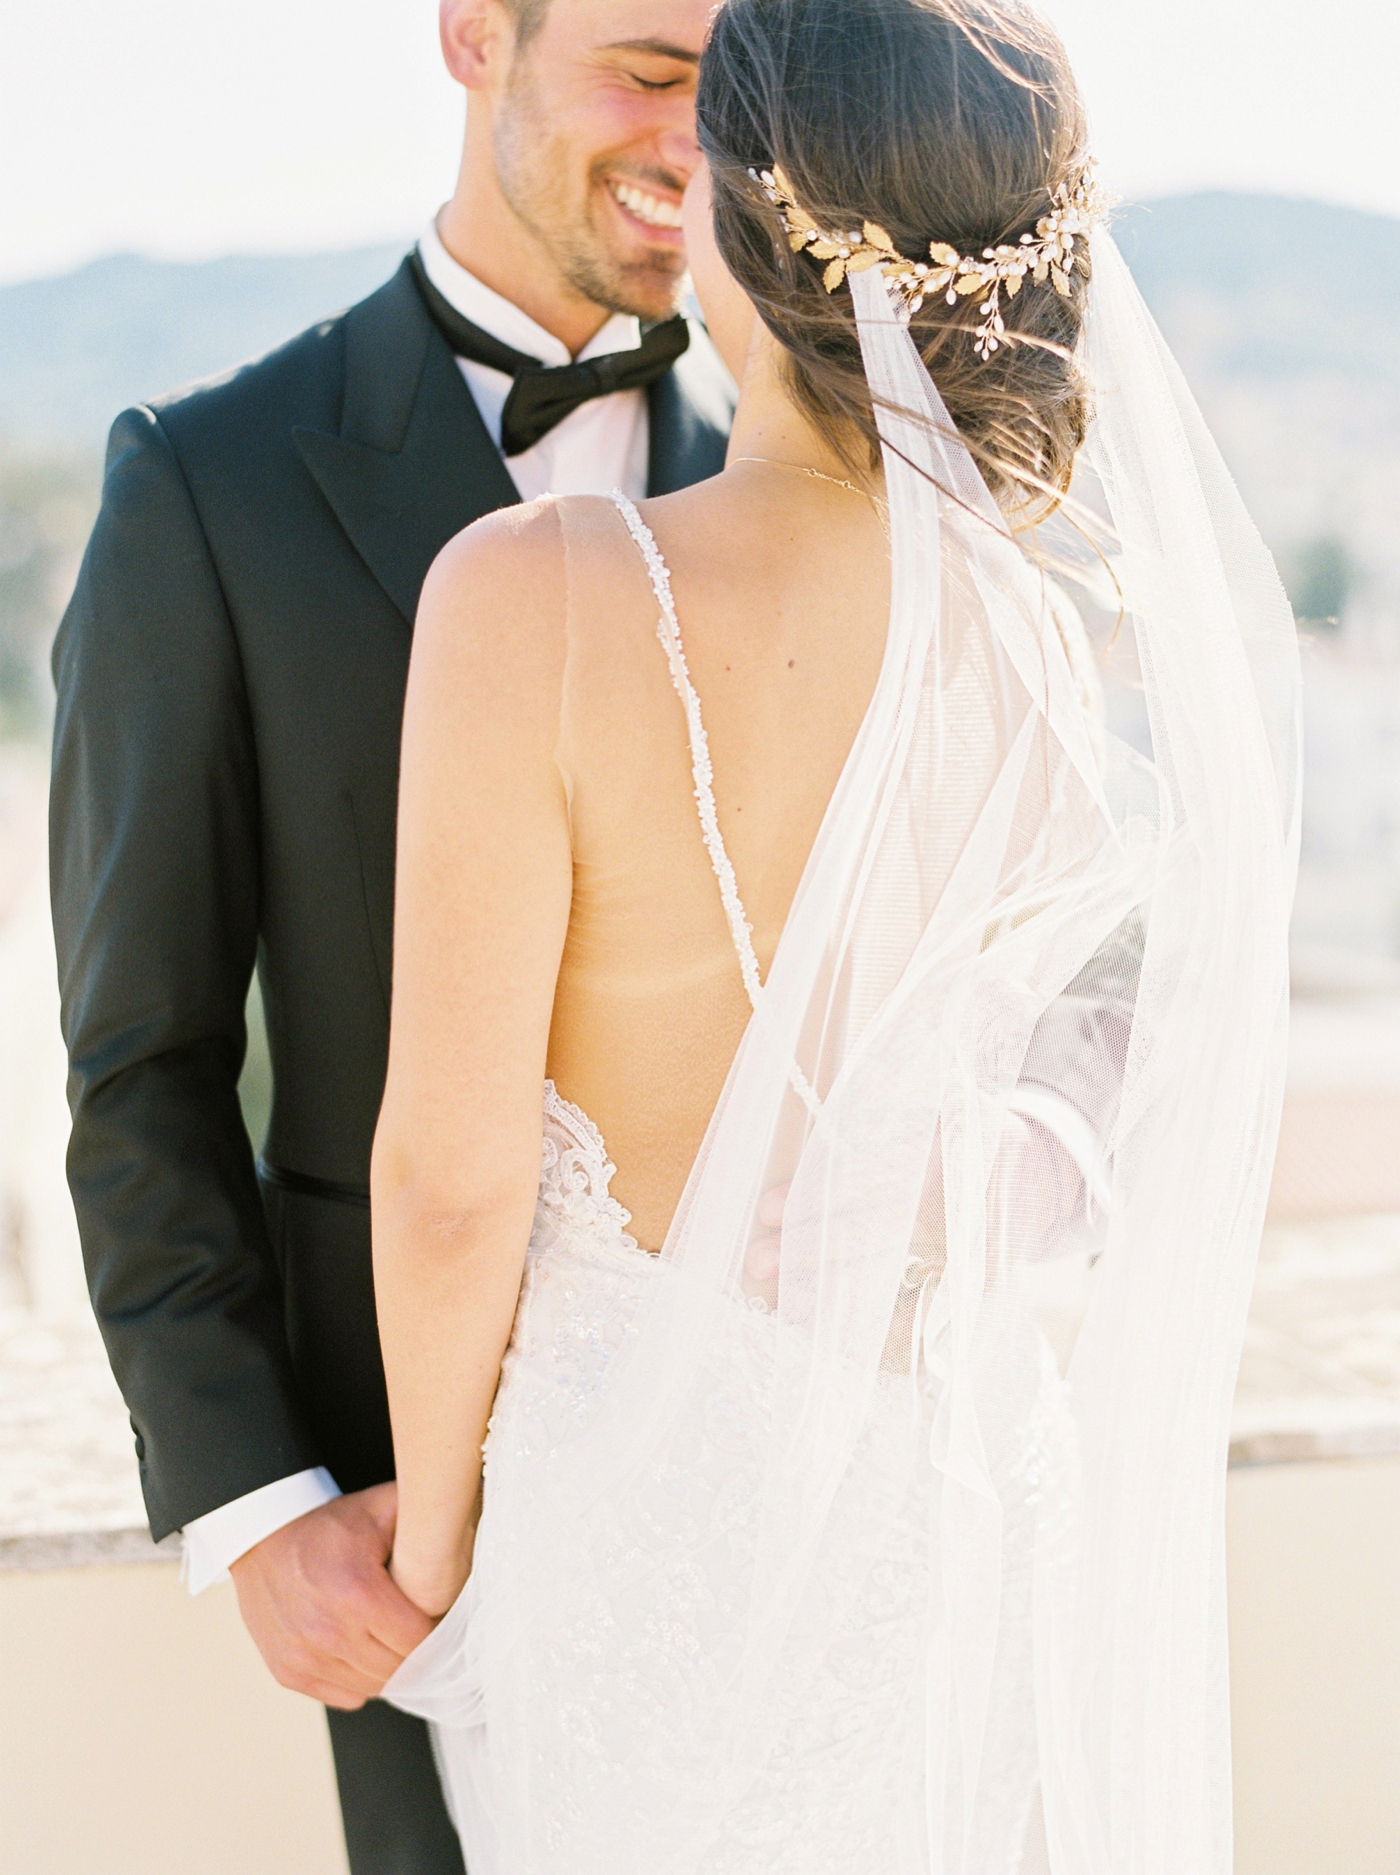 Spetses greece destination wedding photographer | Poseidonion Grand Hotel Wedding | Justine Milton fine art film photography | black and colorful glamorous wedding inspiration